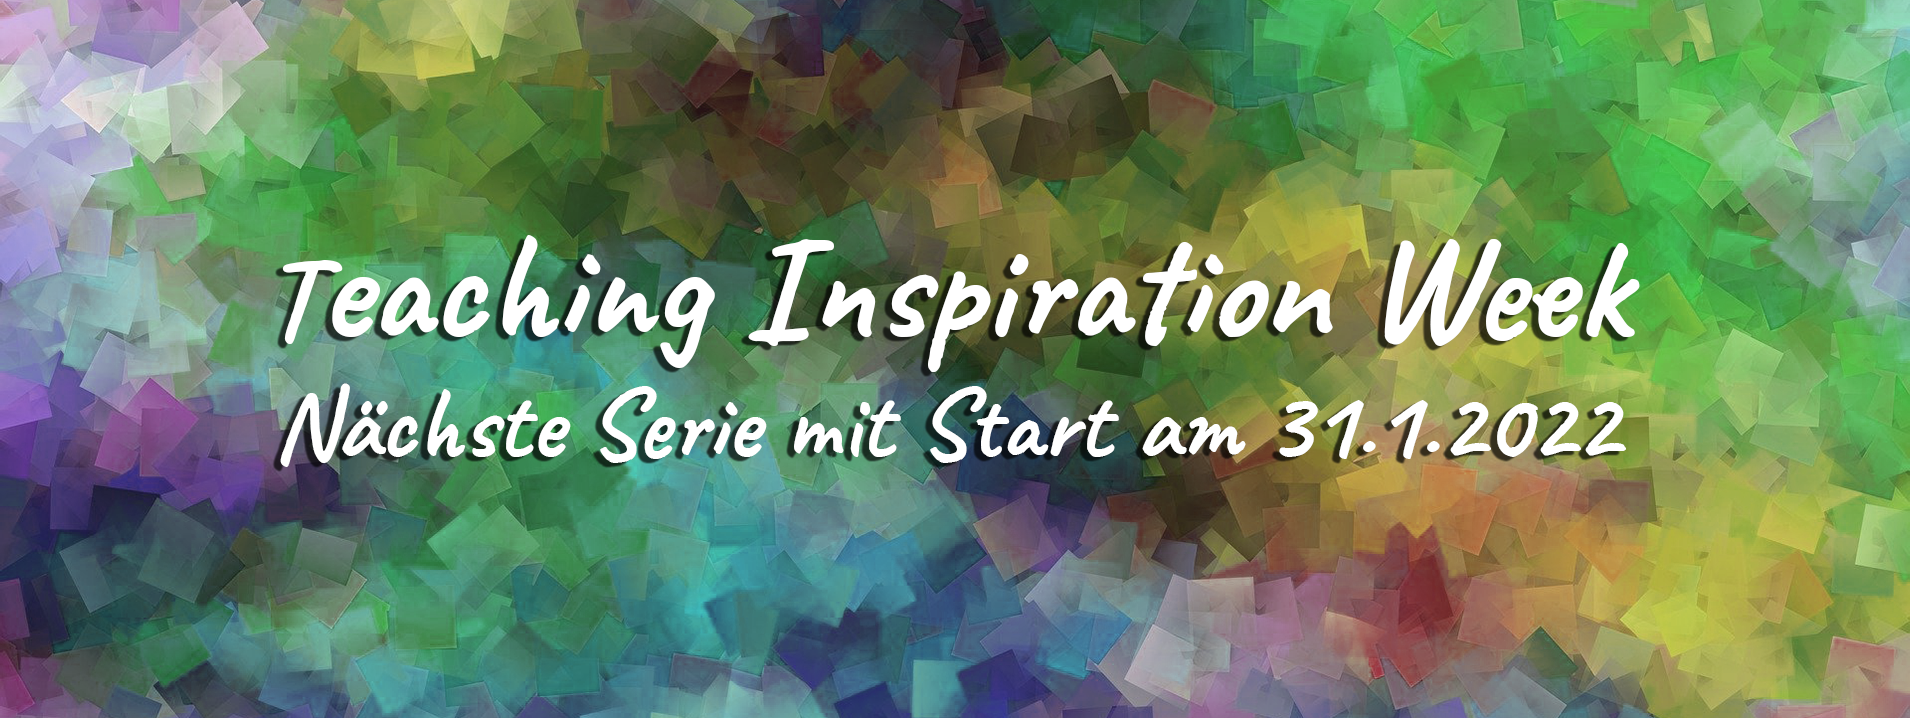 Banner Teaching Inspiration Week 2022